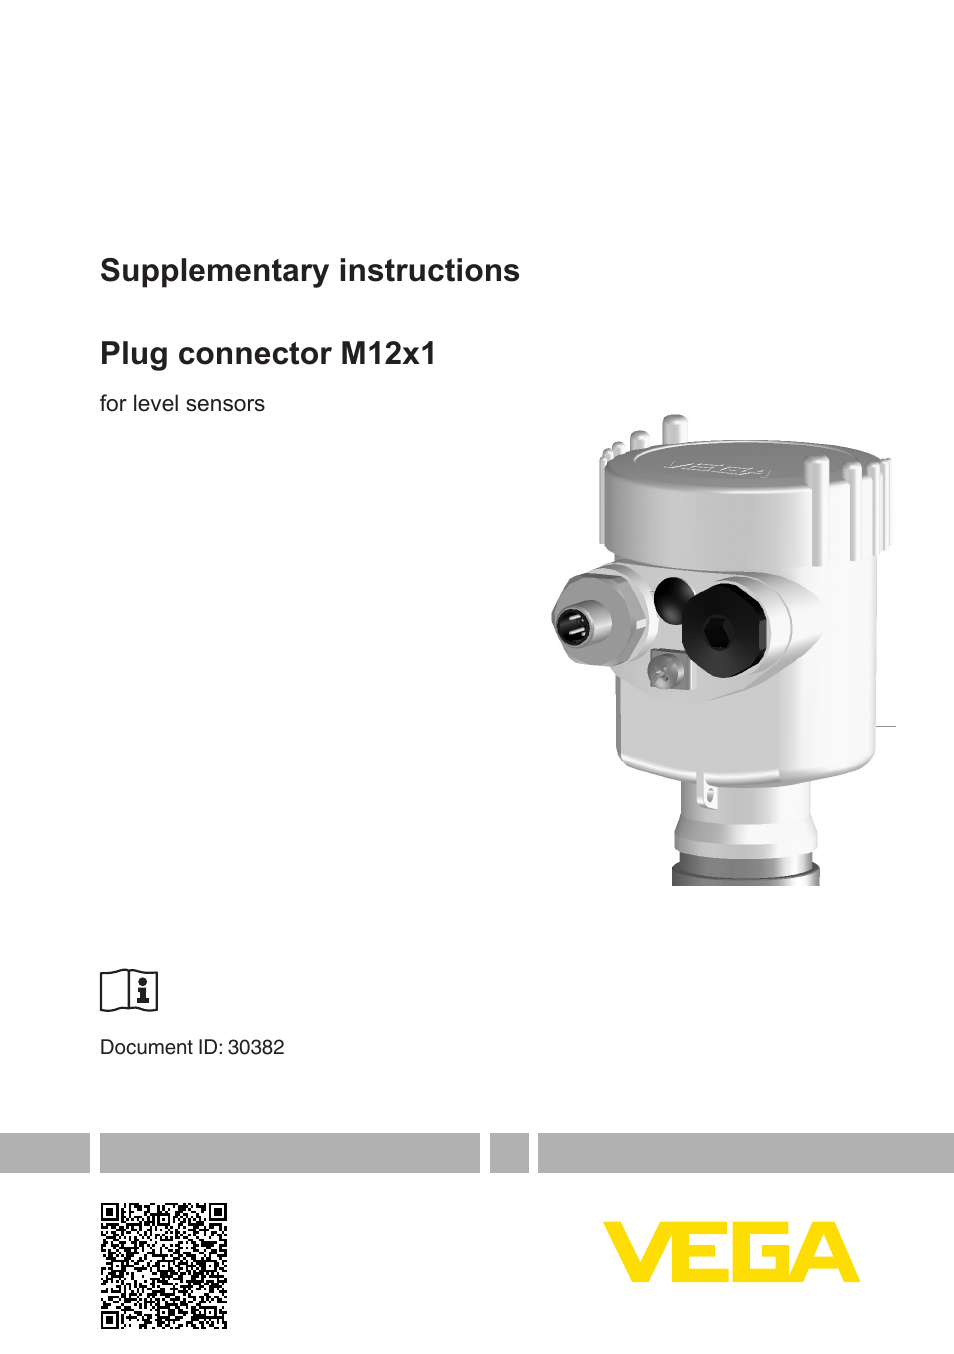 Plug connector M12x1 for level sensors